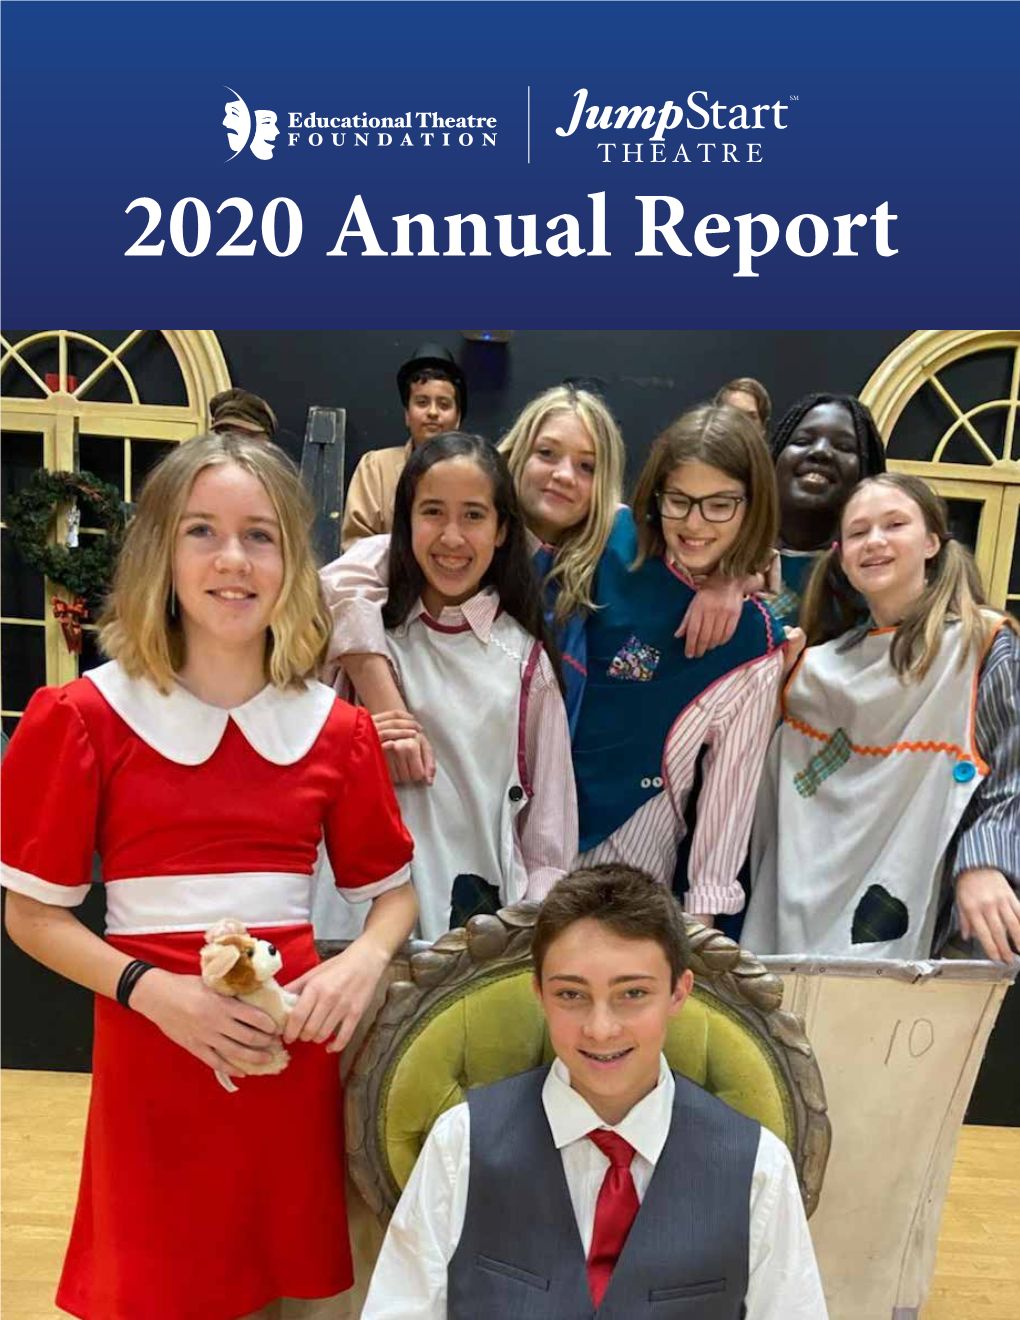 2020 Annual Report Roberts Academy Students, Cincinnati